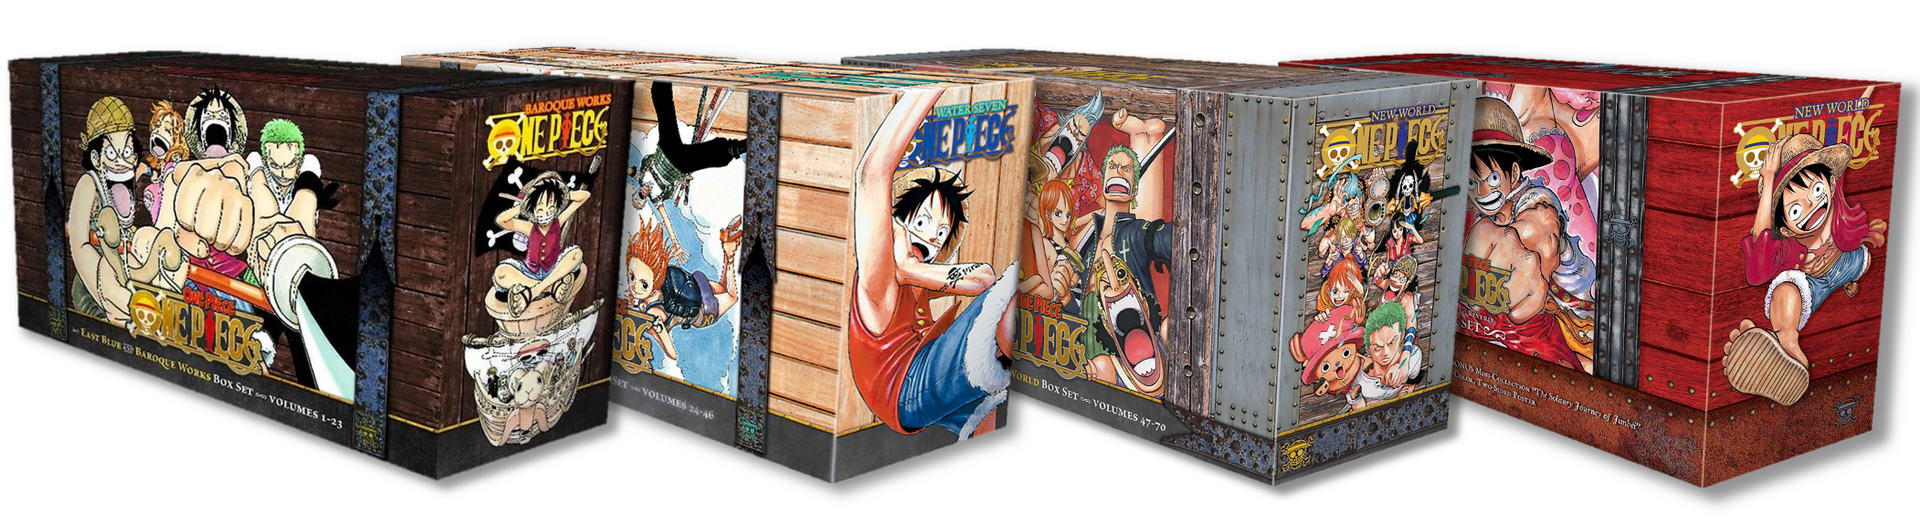 One Piece Manga Set 1 Vol 1-5 East Blue and Baroque Works English Viz Media